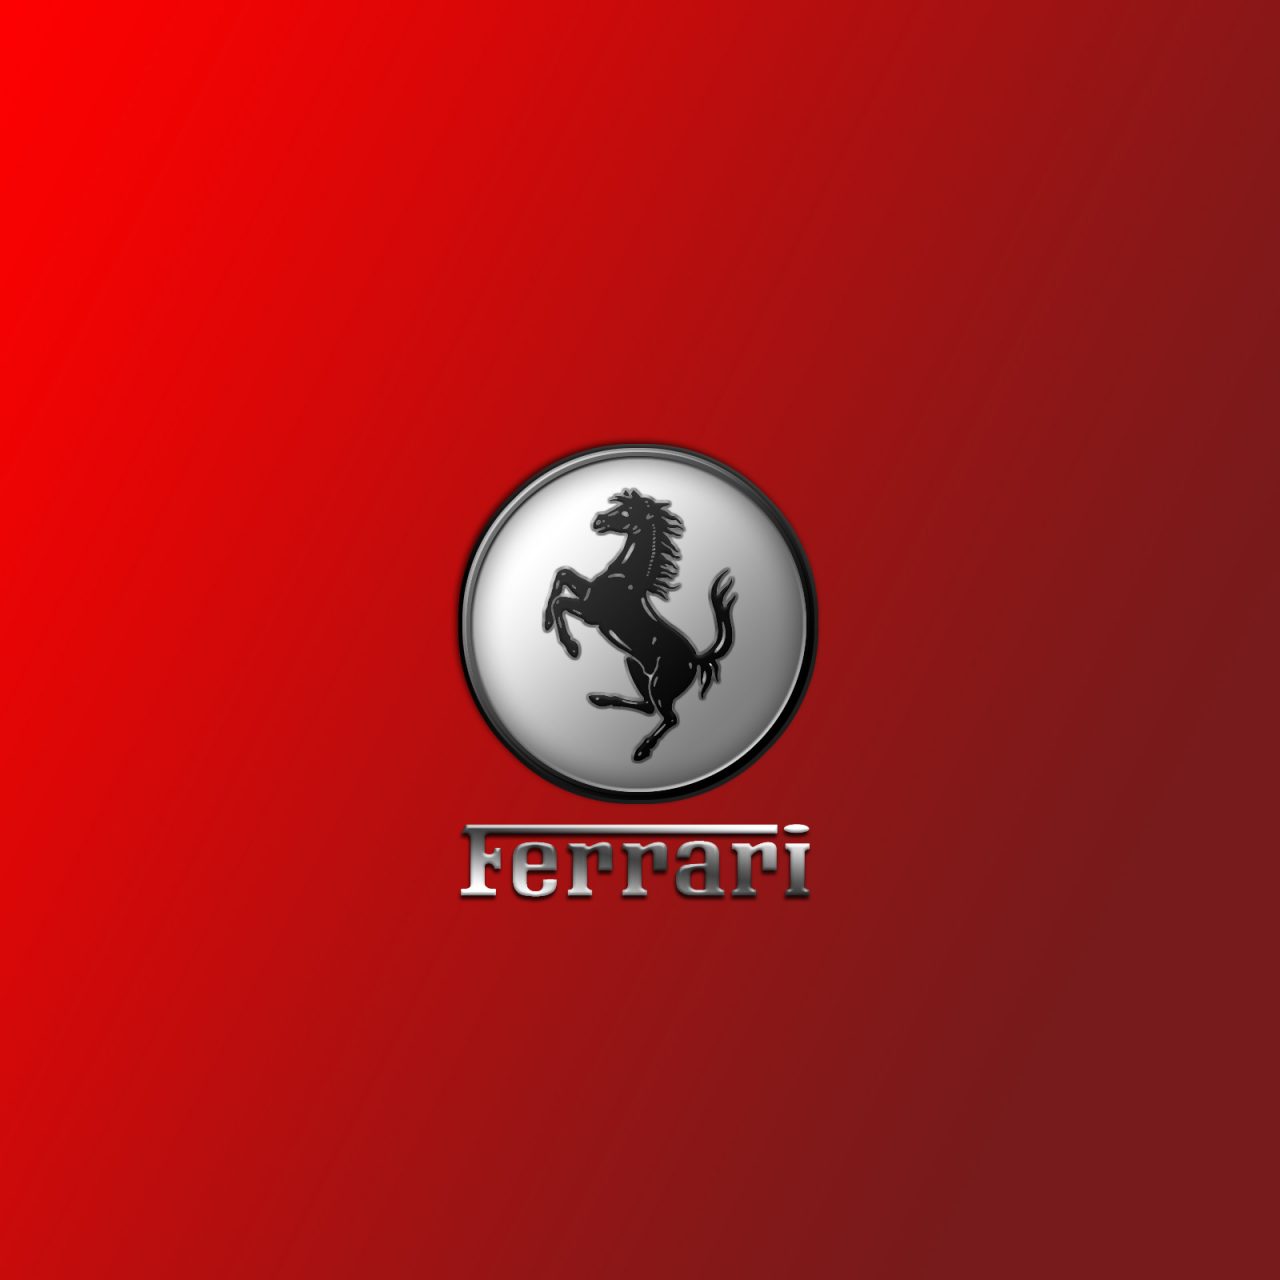 Ferrari - 1280x1280 Wallpaper - teahub.io